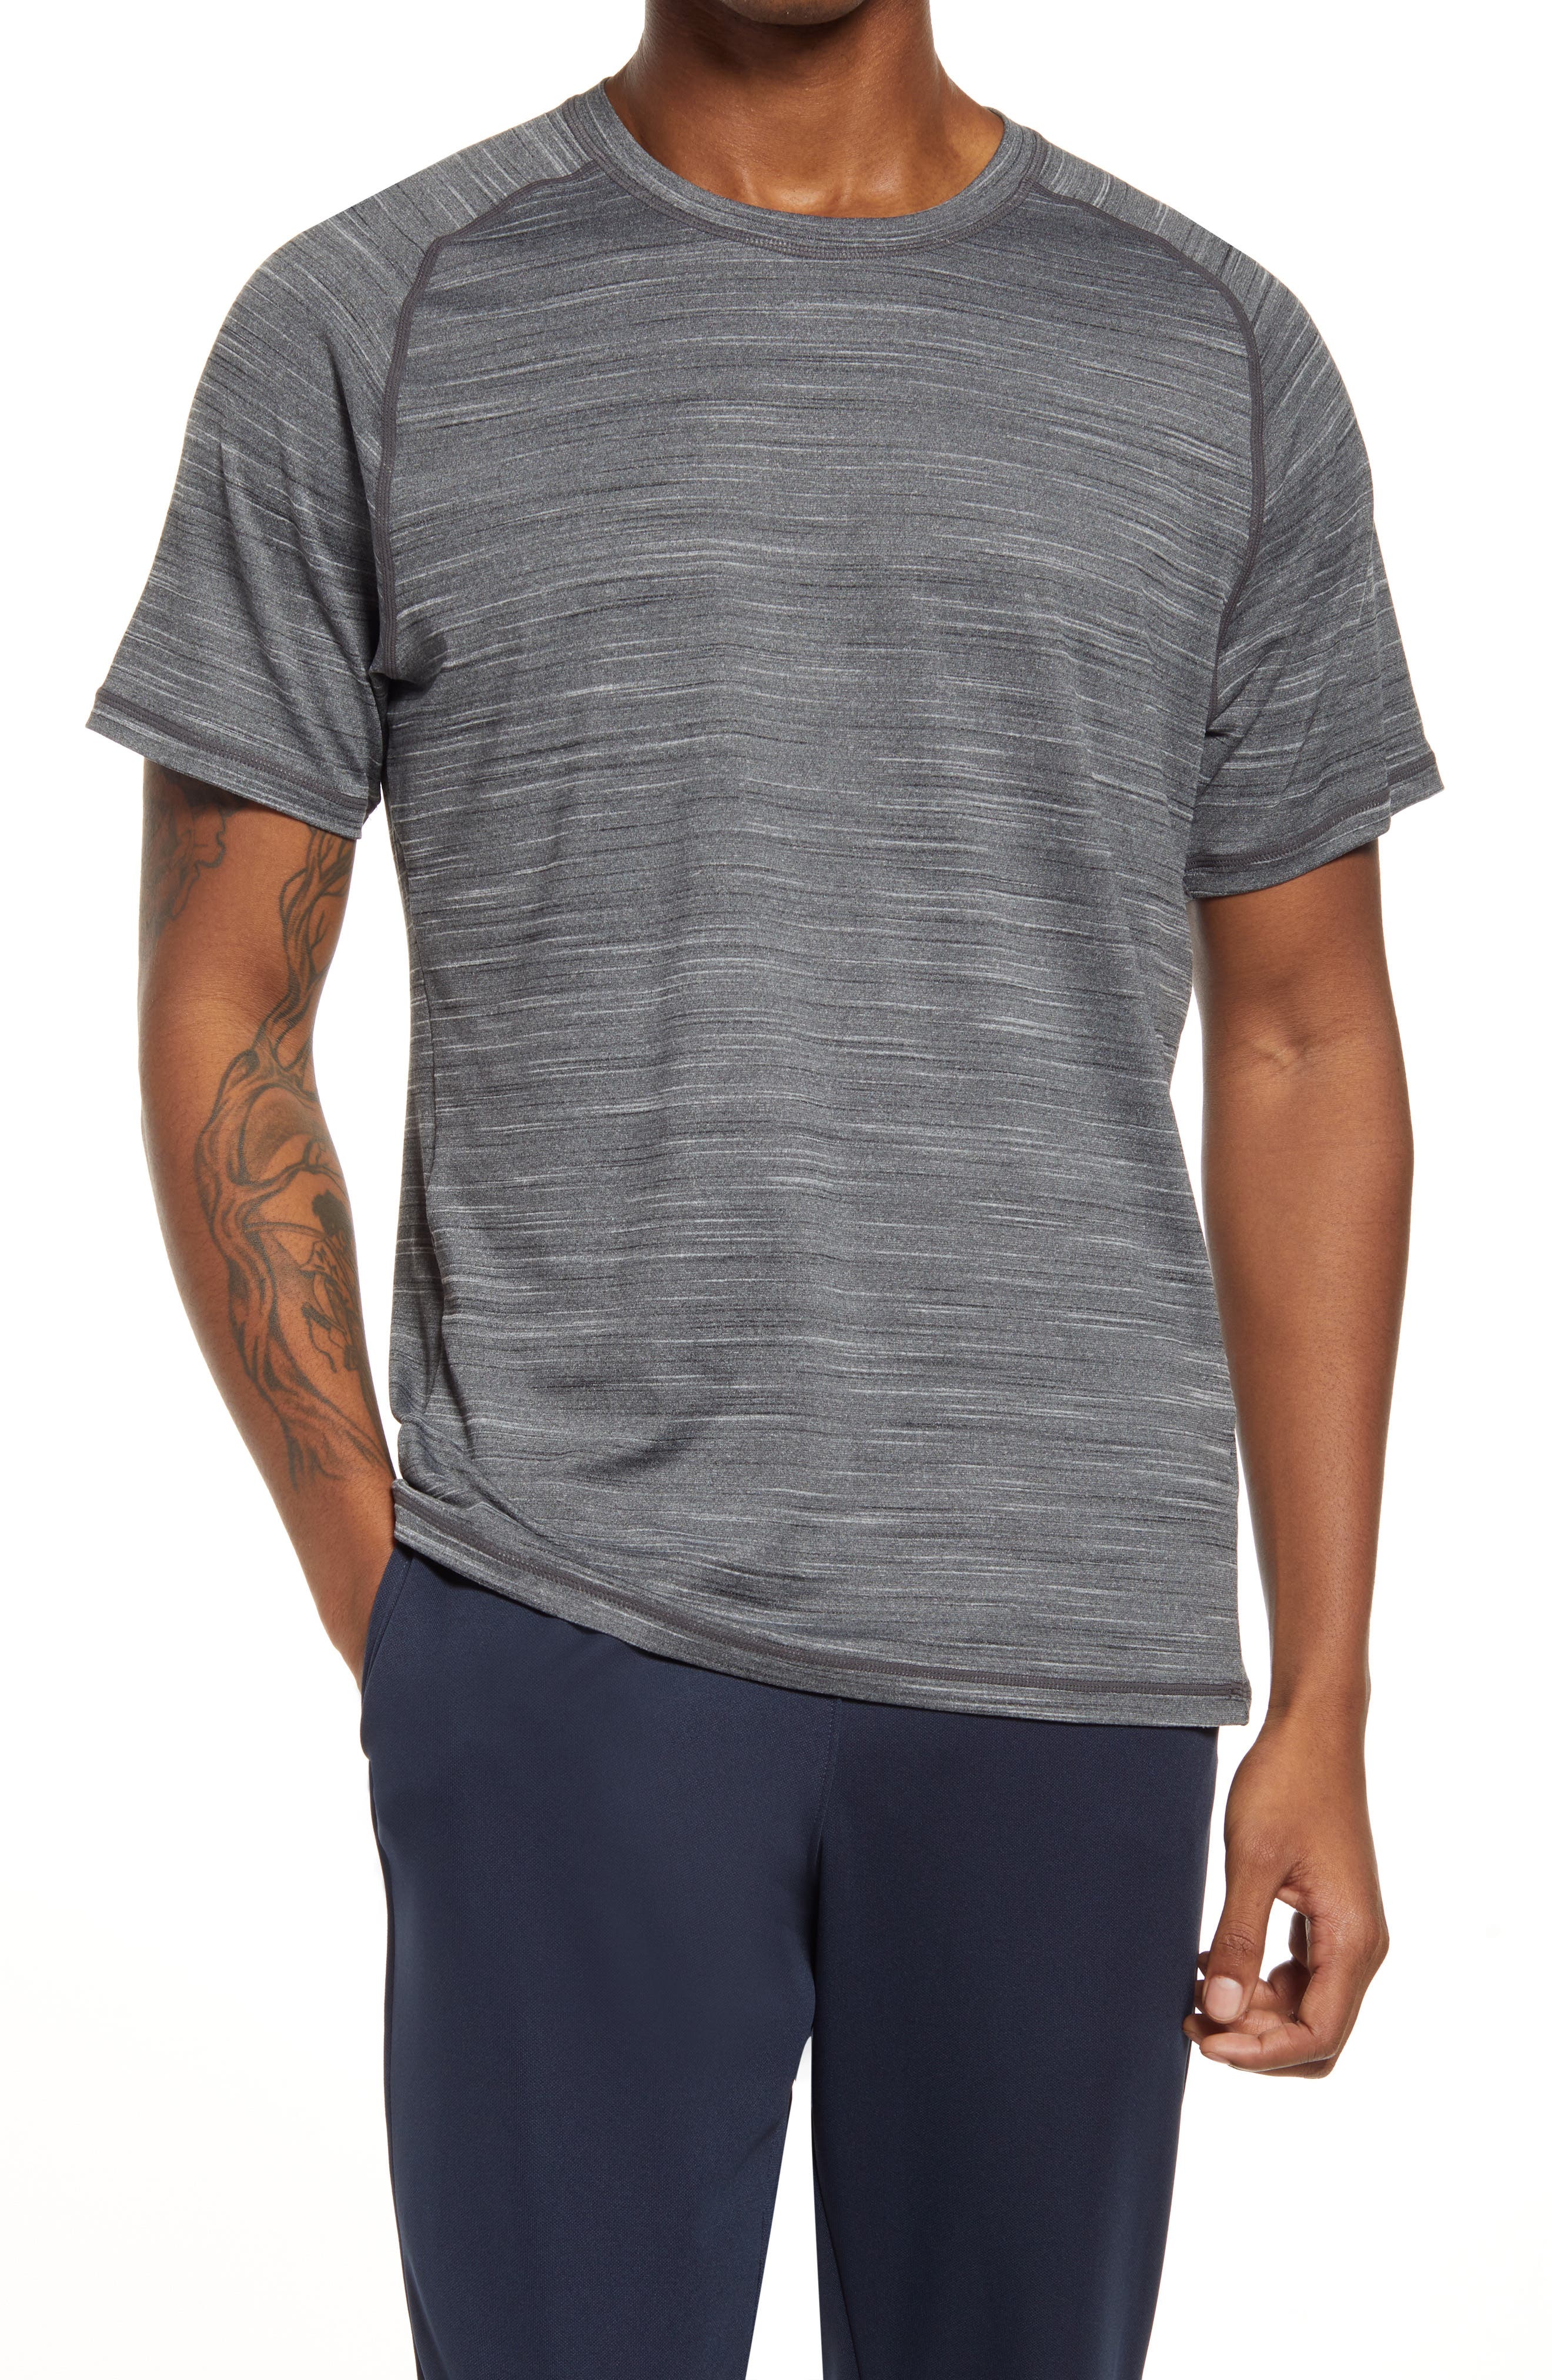 Men's Slim Fit V Neck Short Sleeve Stylish Formal Tee T-shirt Casual Tops Shirts